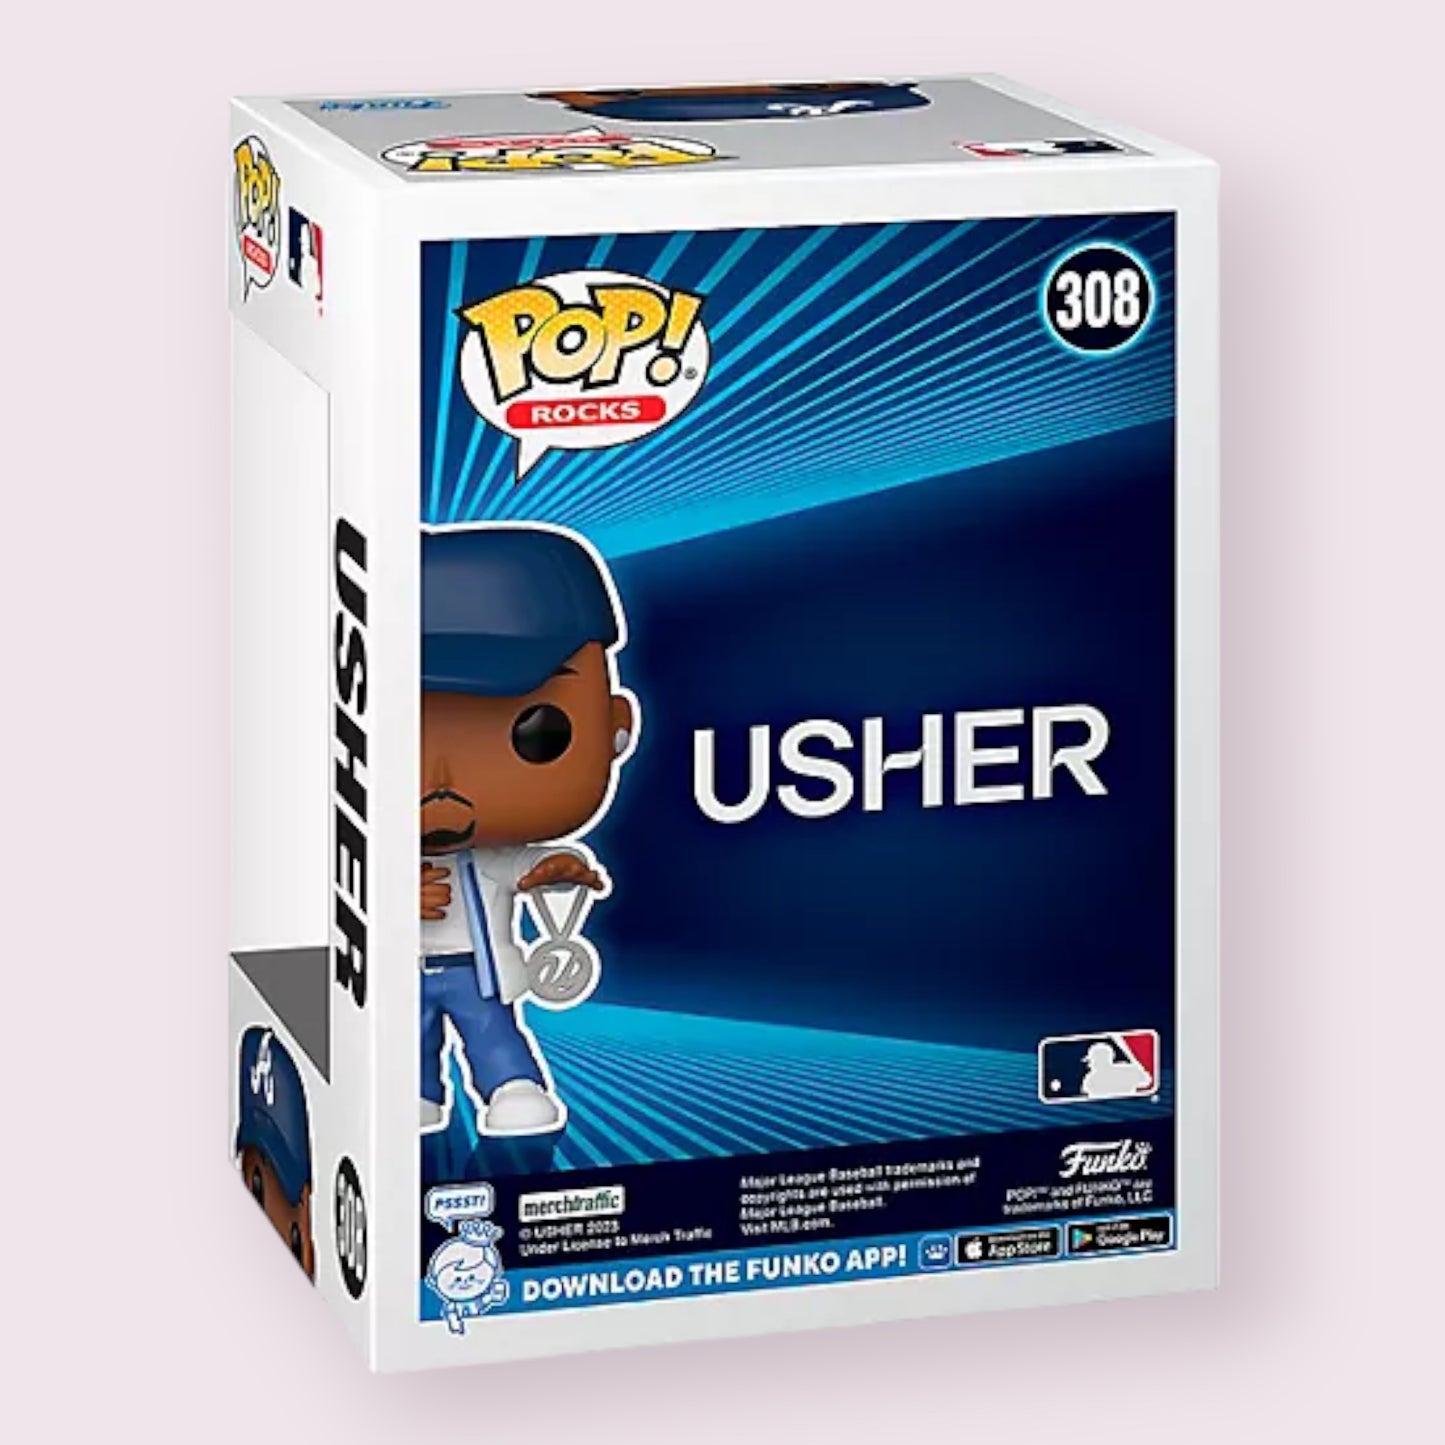 POP! Usher  Pixie Candy Shoppe   